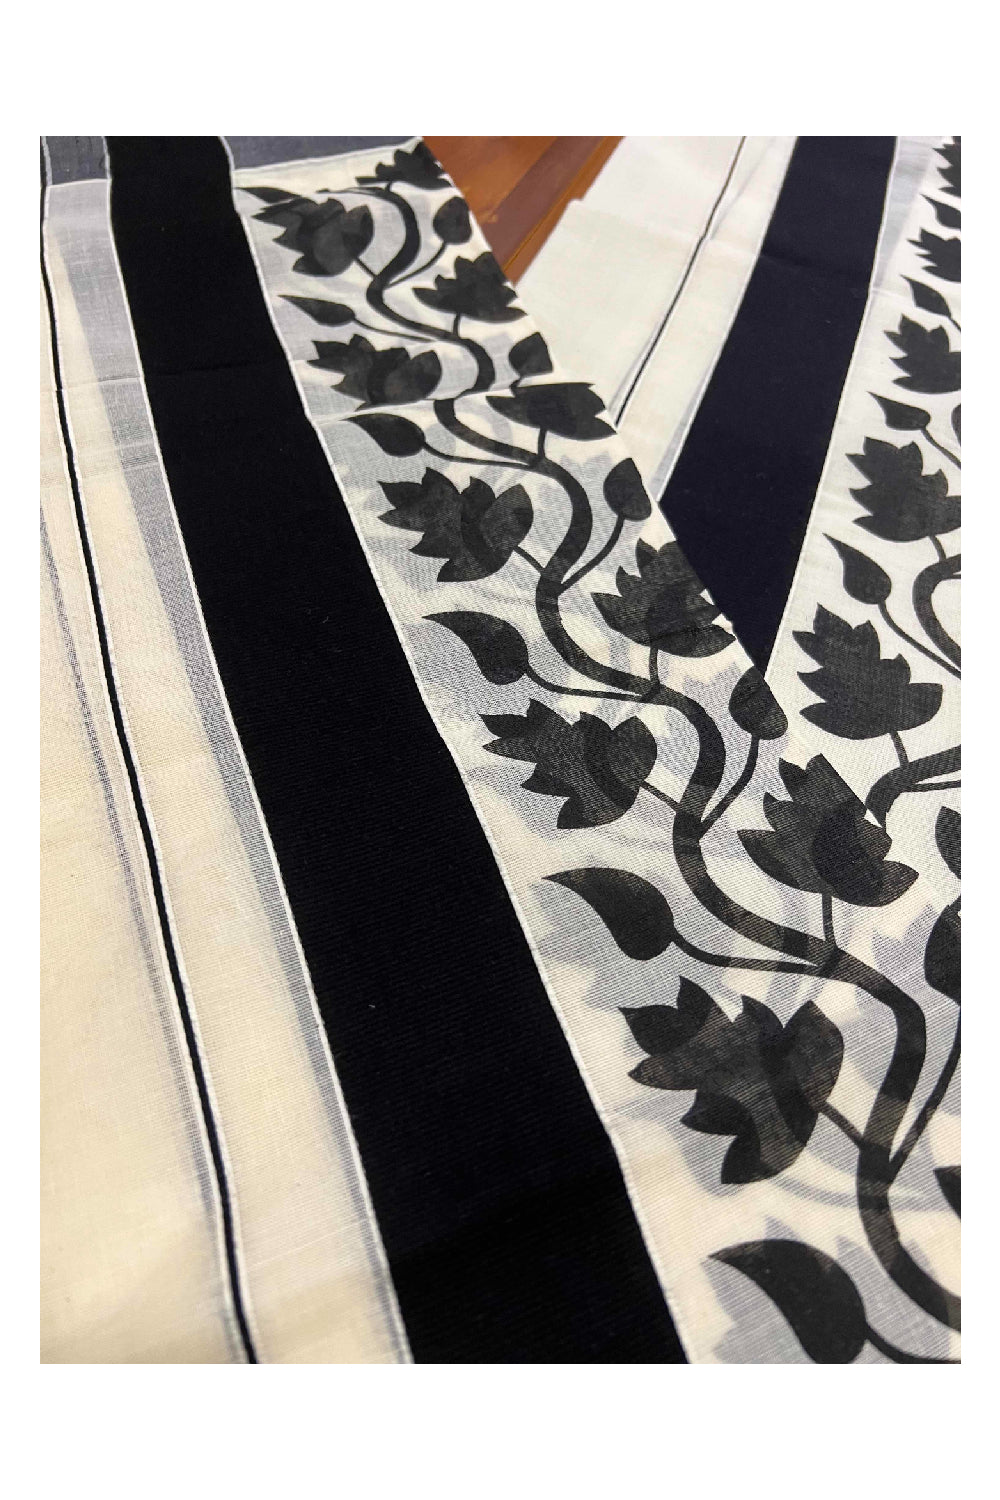 Southloom Original Design Single Set Mundu with Black Floral Leaves Block Print (Mundum Neriyathum)